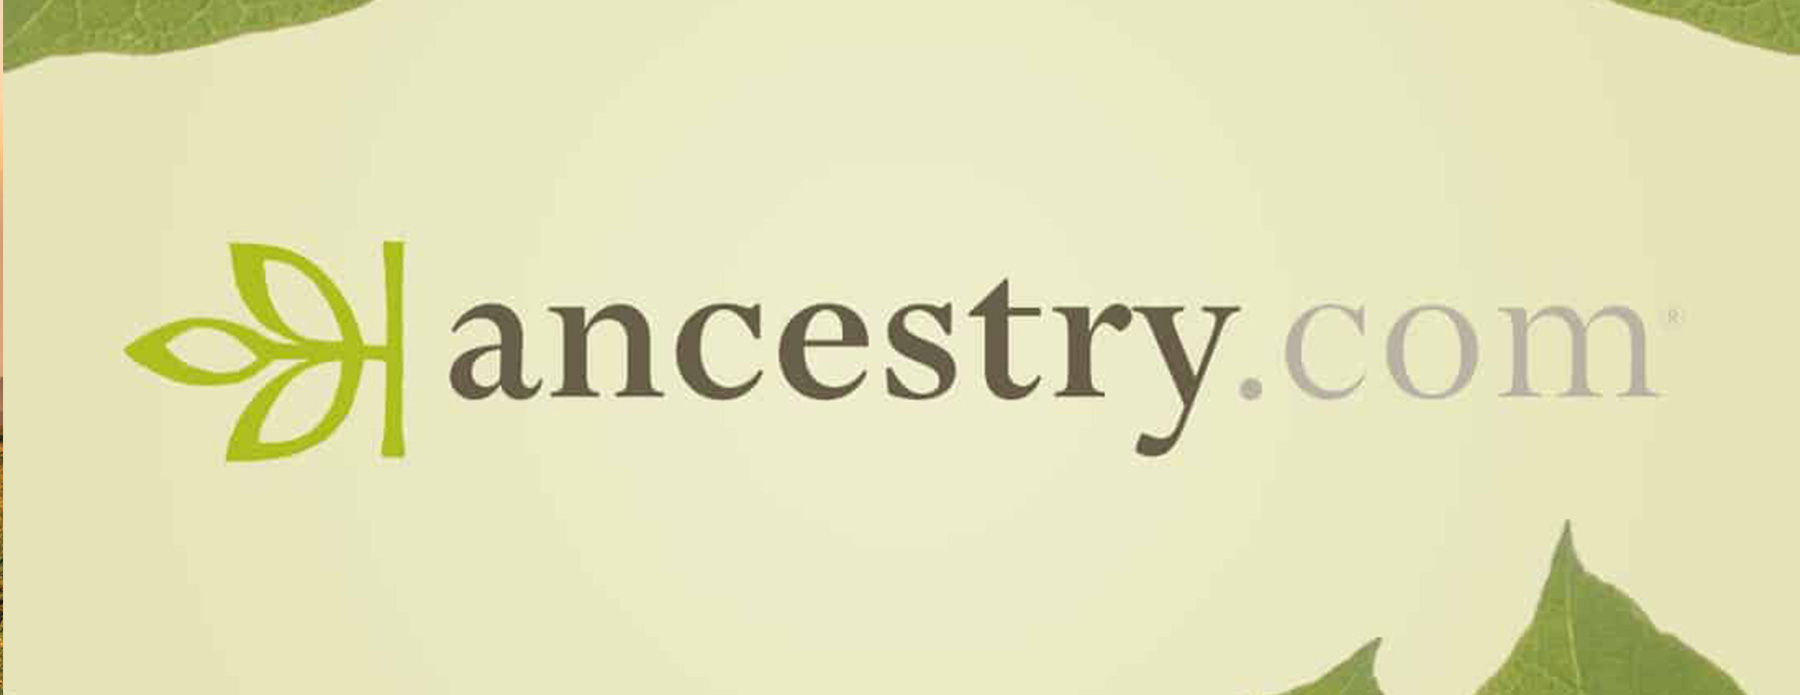 Ancestry.comFeaturedImage_1800x695